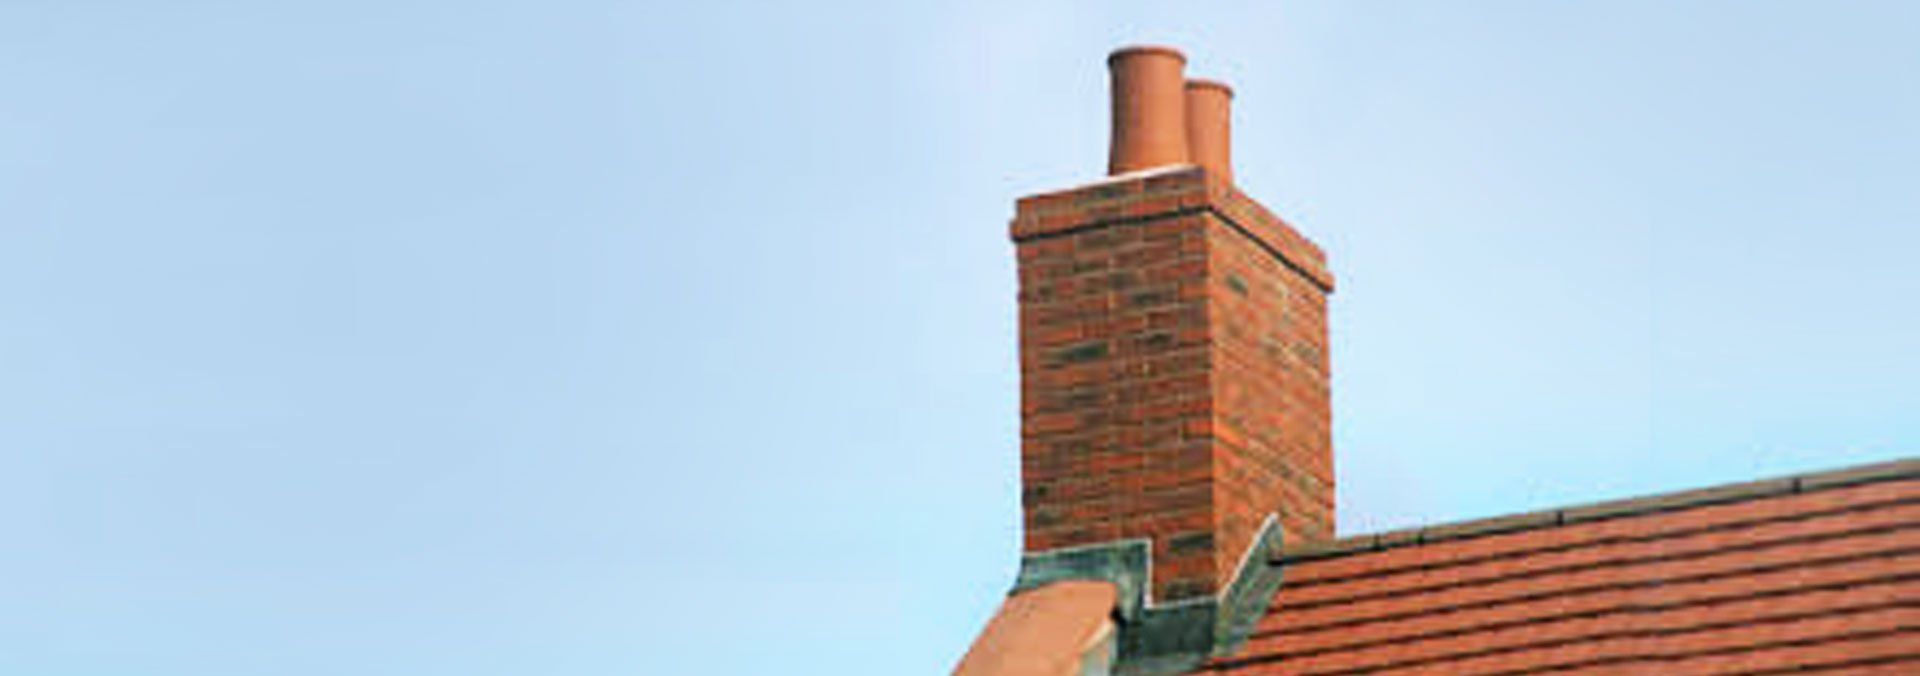 roof chimney